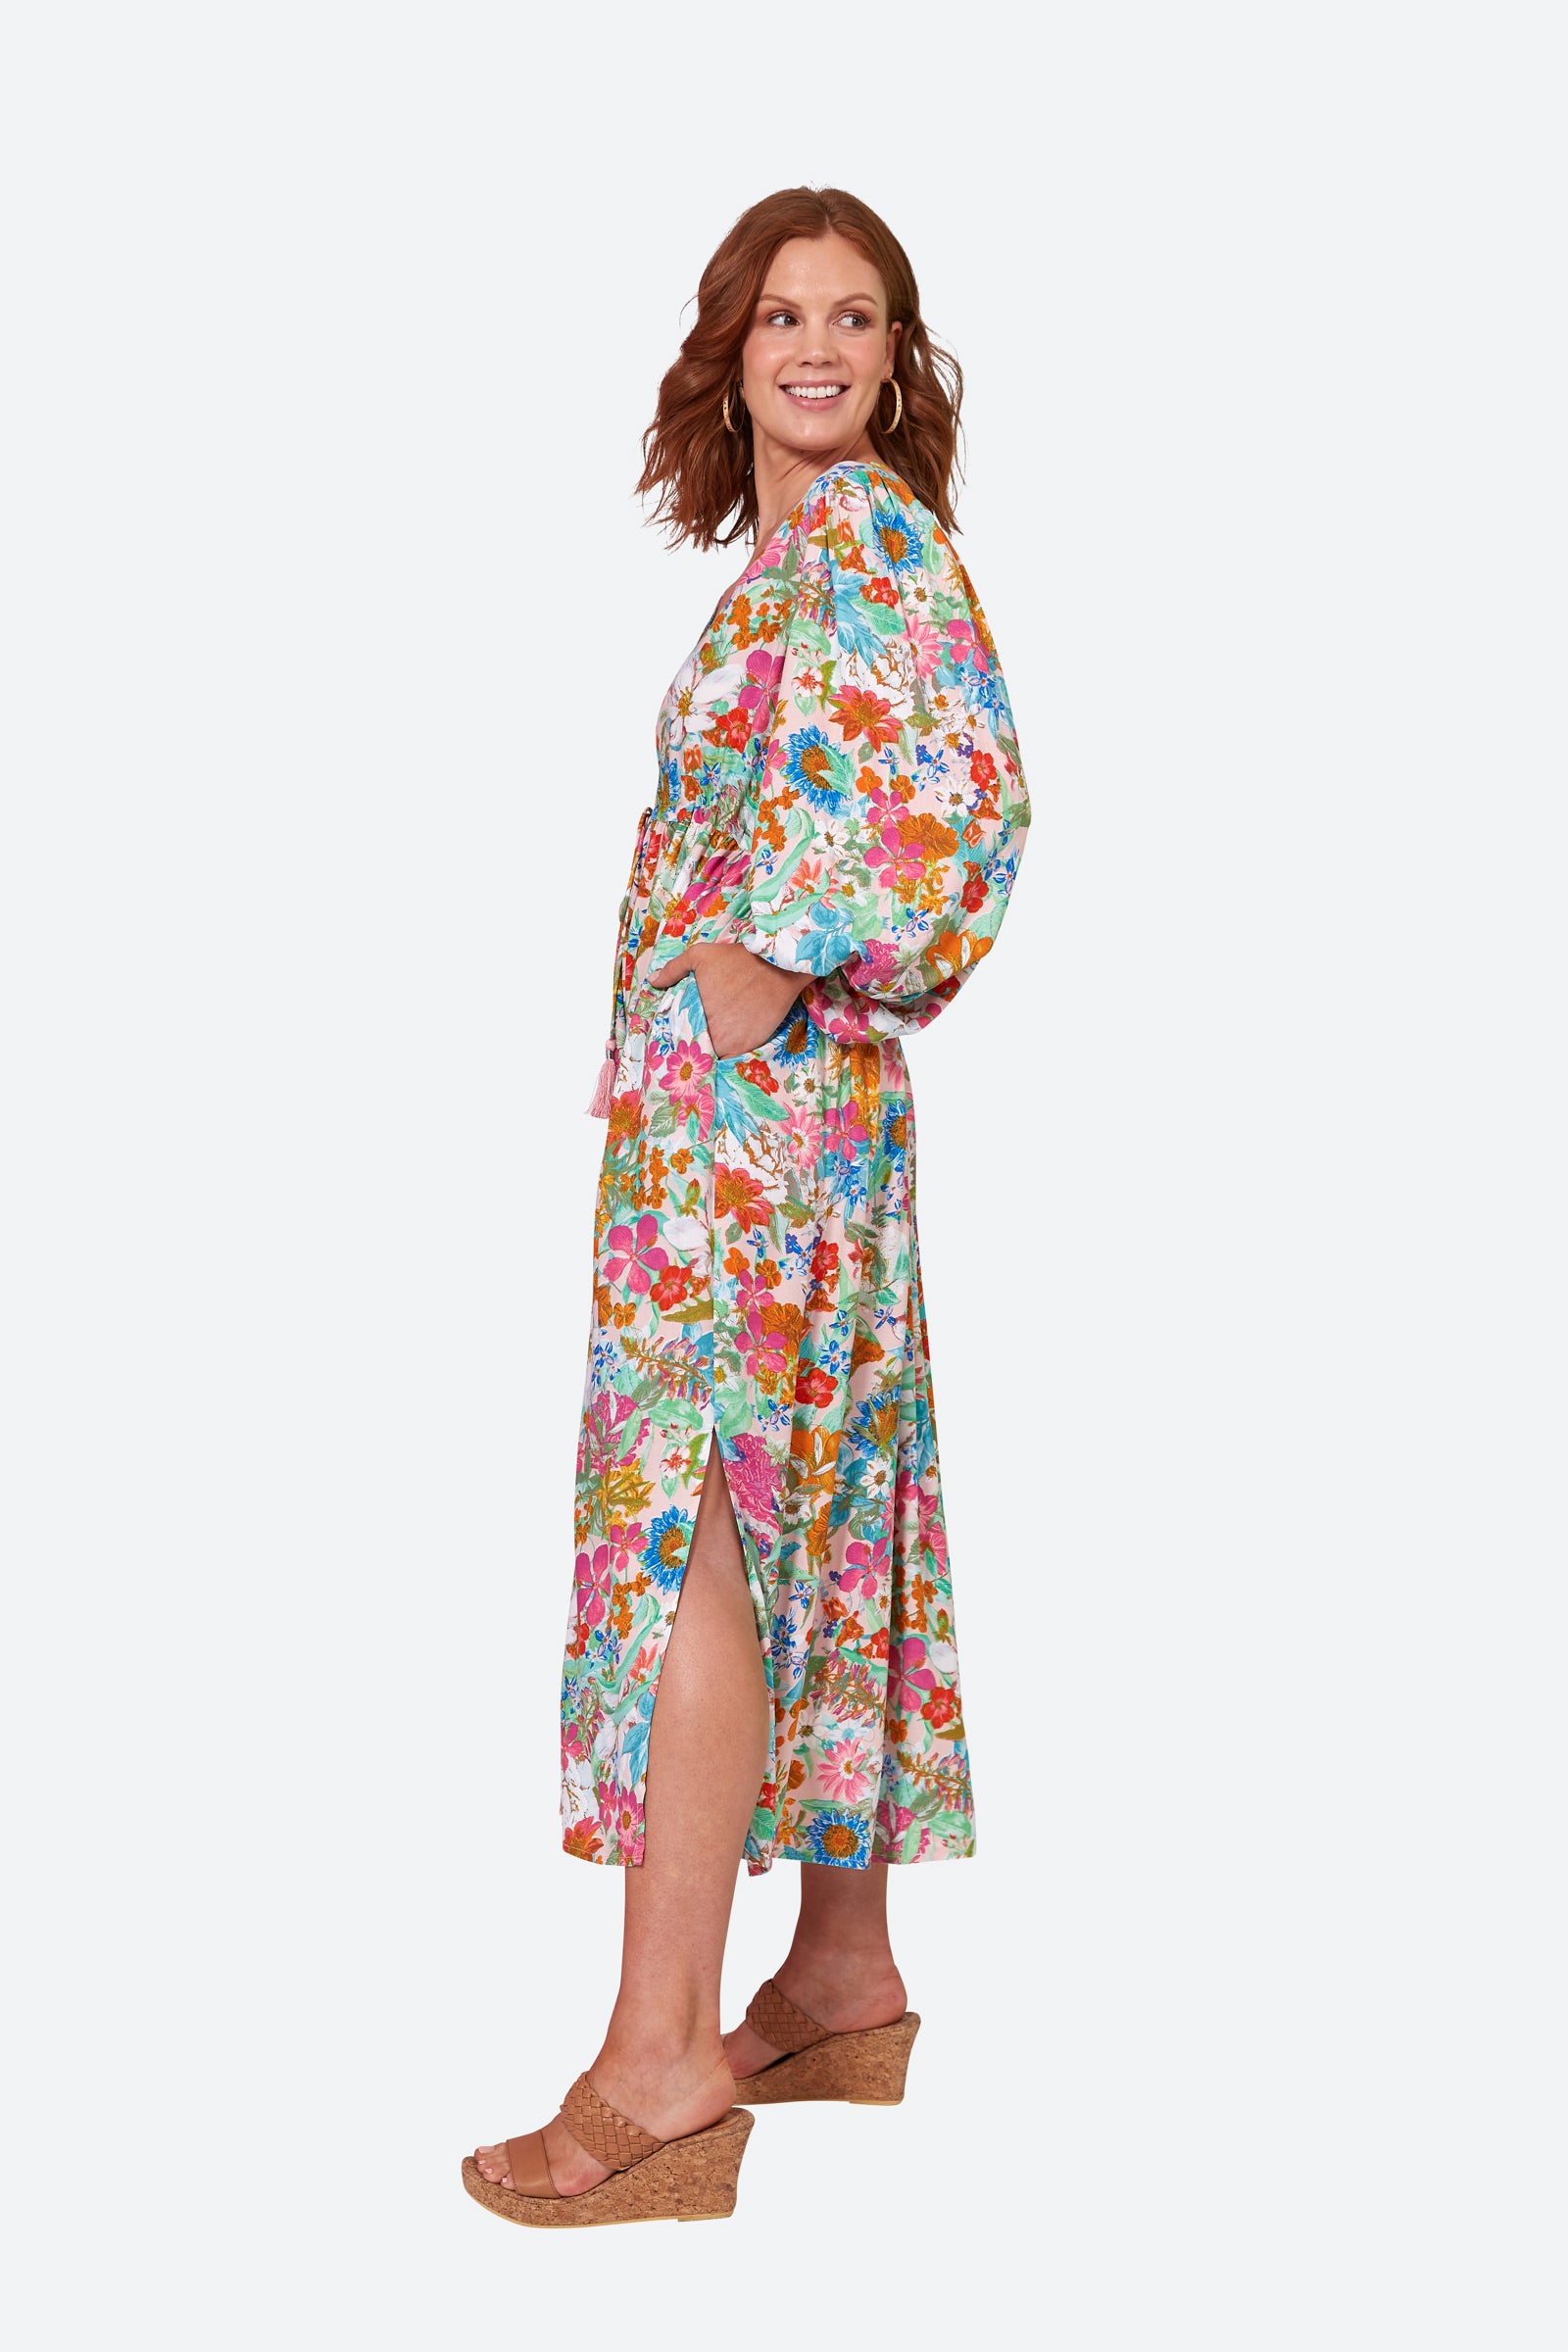 Esprit Maxi - Pink Flourish - eb&ive Clothing - Dress Maxi